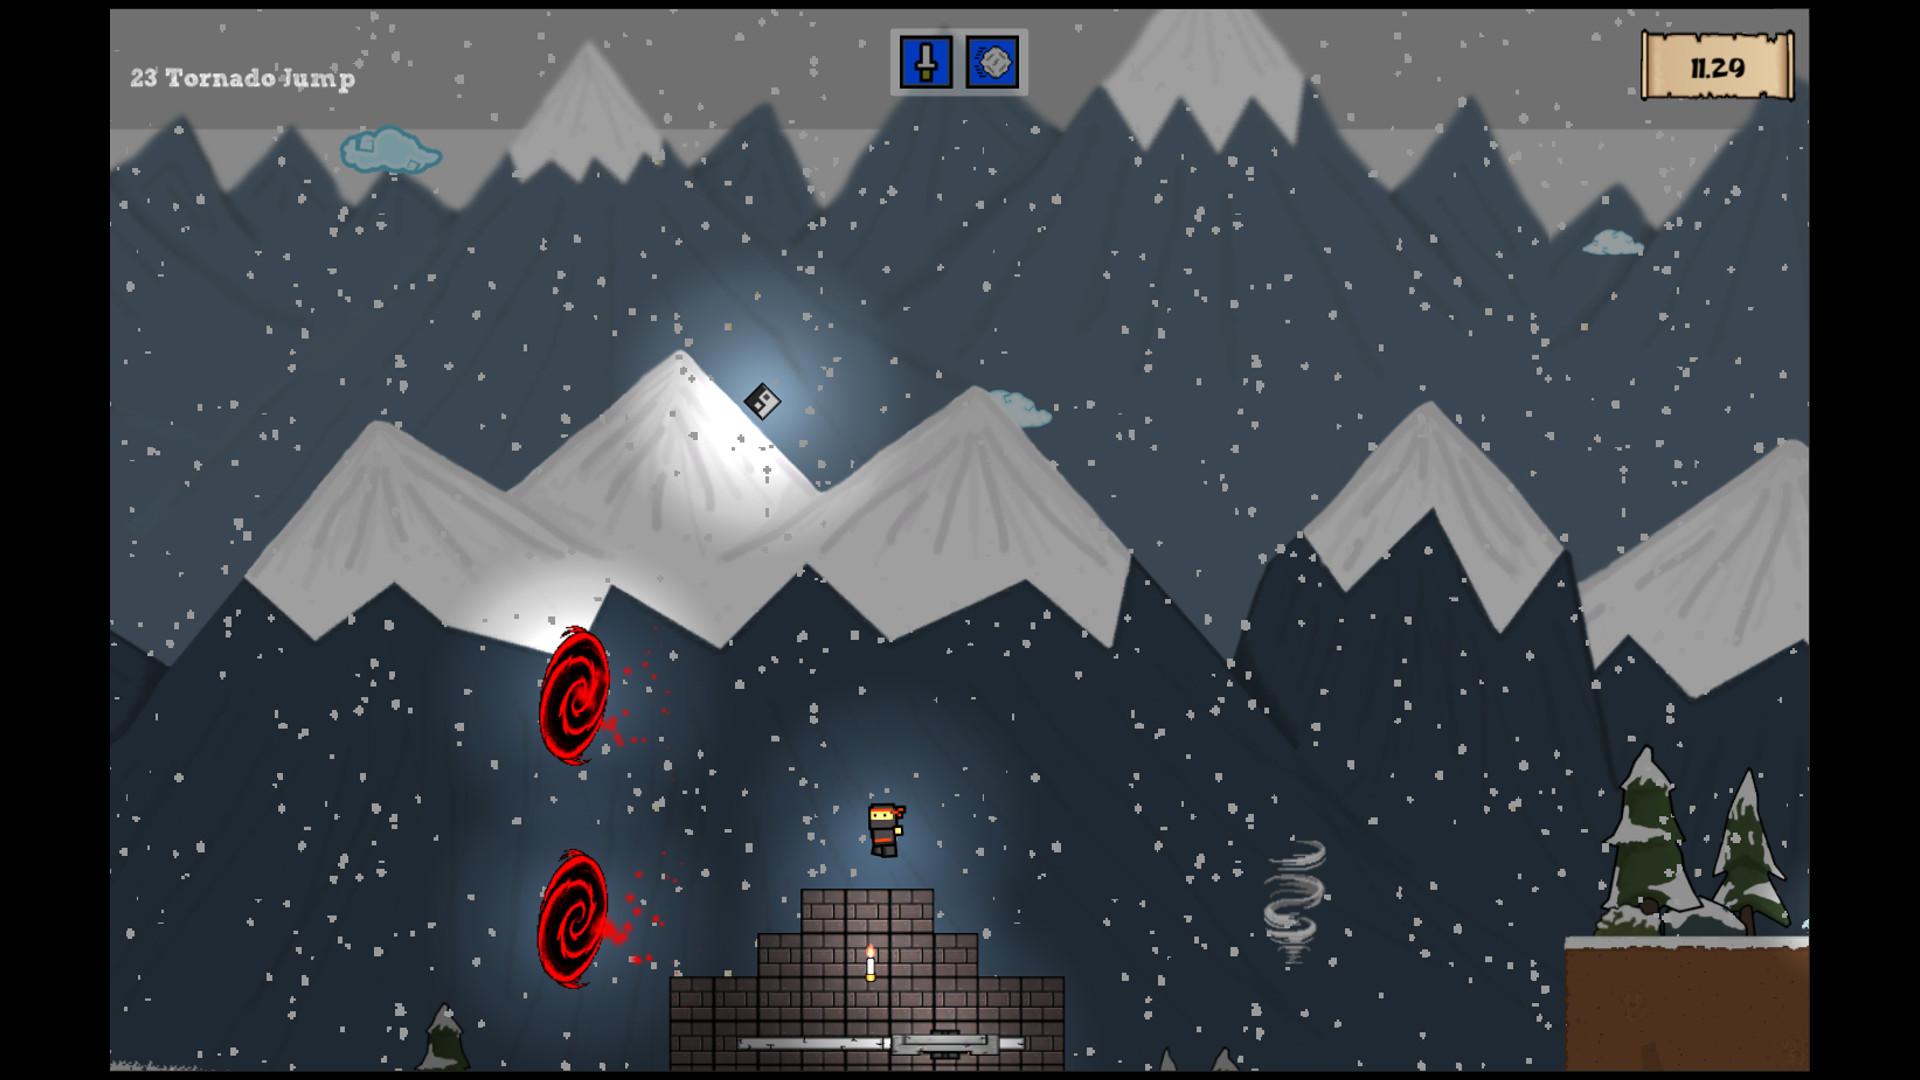 Screenshot №12 from game Save the Ninja Clan